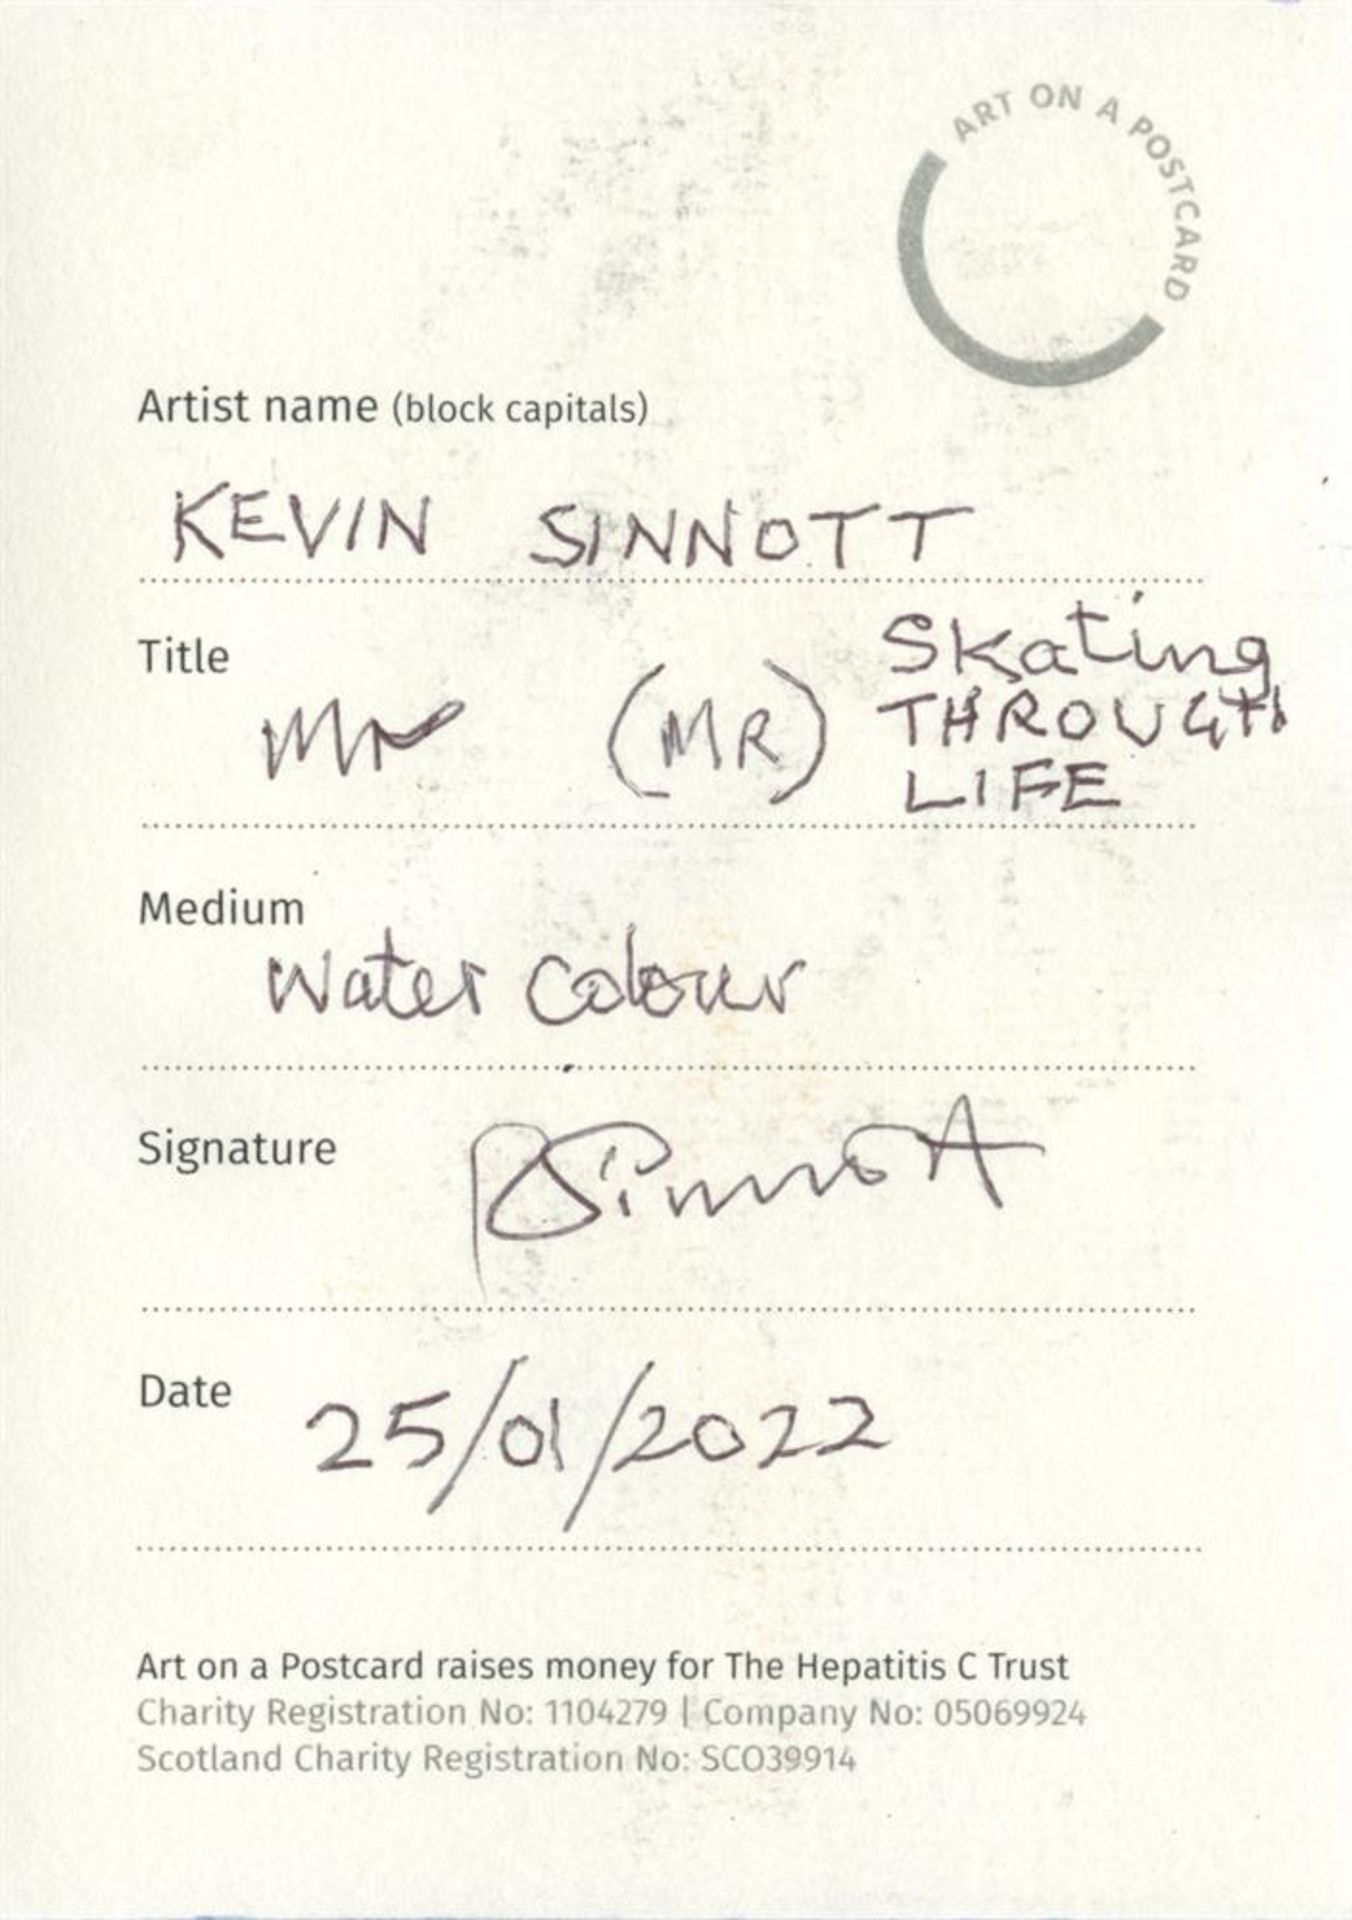 Kevin Sinnott, Skating Through Life, 2022 - Image 2 of 3